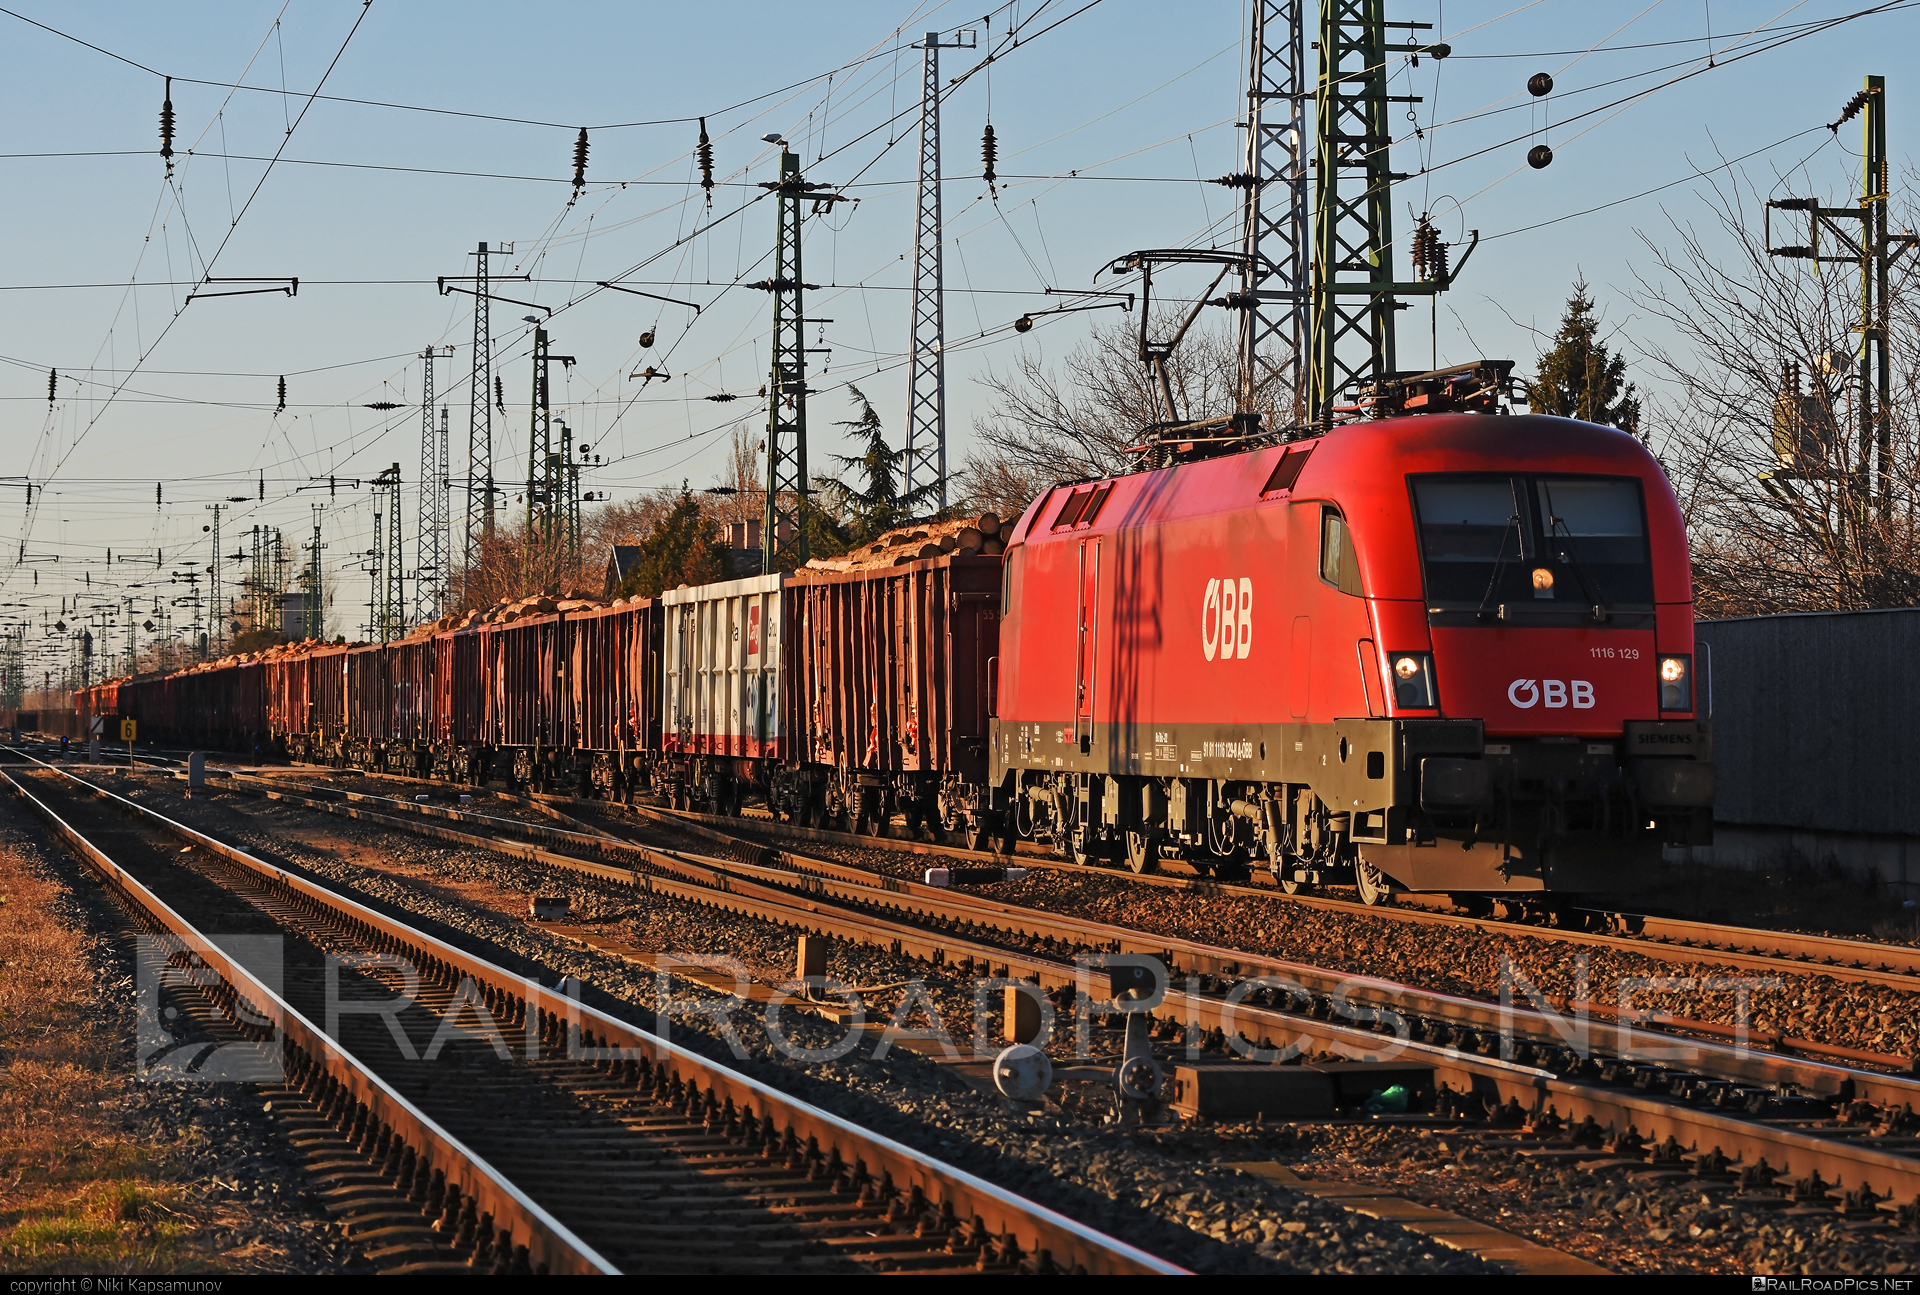 Siemens ES 64 U2 - 1116 129 operated by Rail Cargo Austria AG #es64 #es64u2 #eurosprinter #obb #openwagon #osterreichischebundesbahnen #rcw #siemens #siemensEs64 #siemensEs64u2 #siemenstaurus #taurus #tauruslocomotive